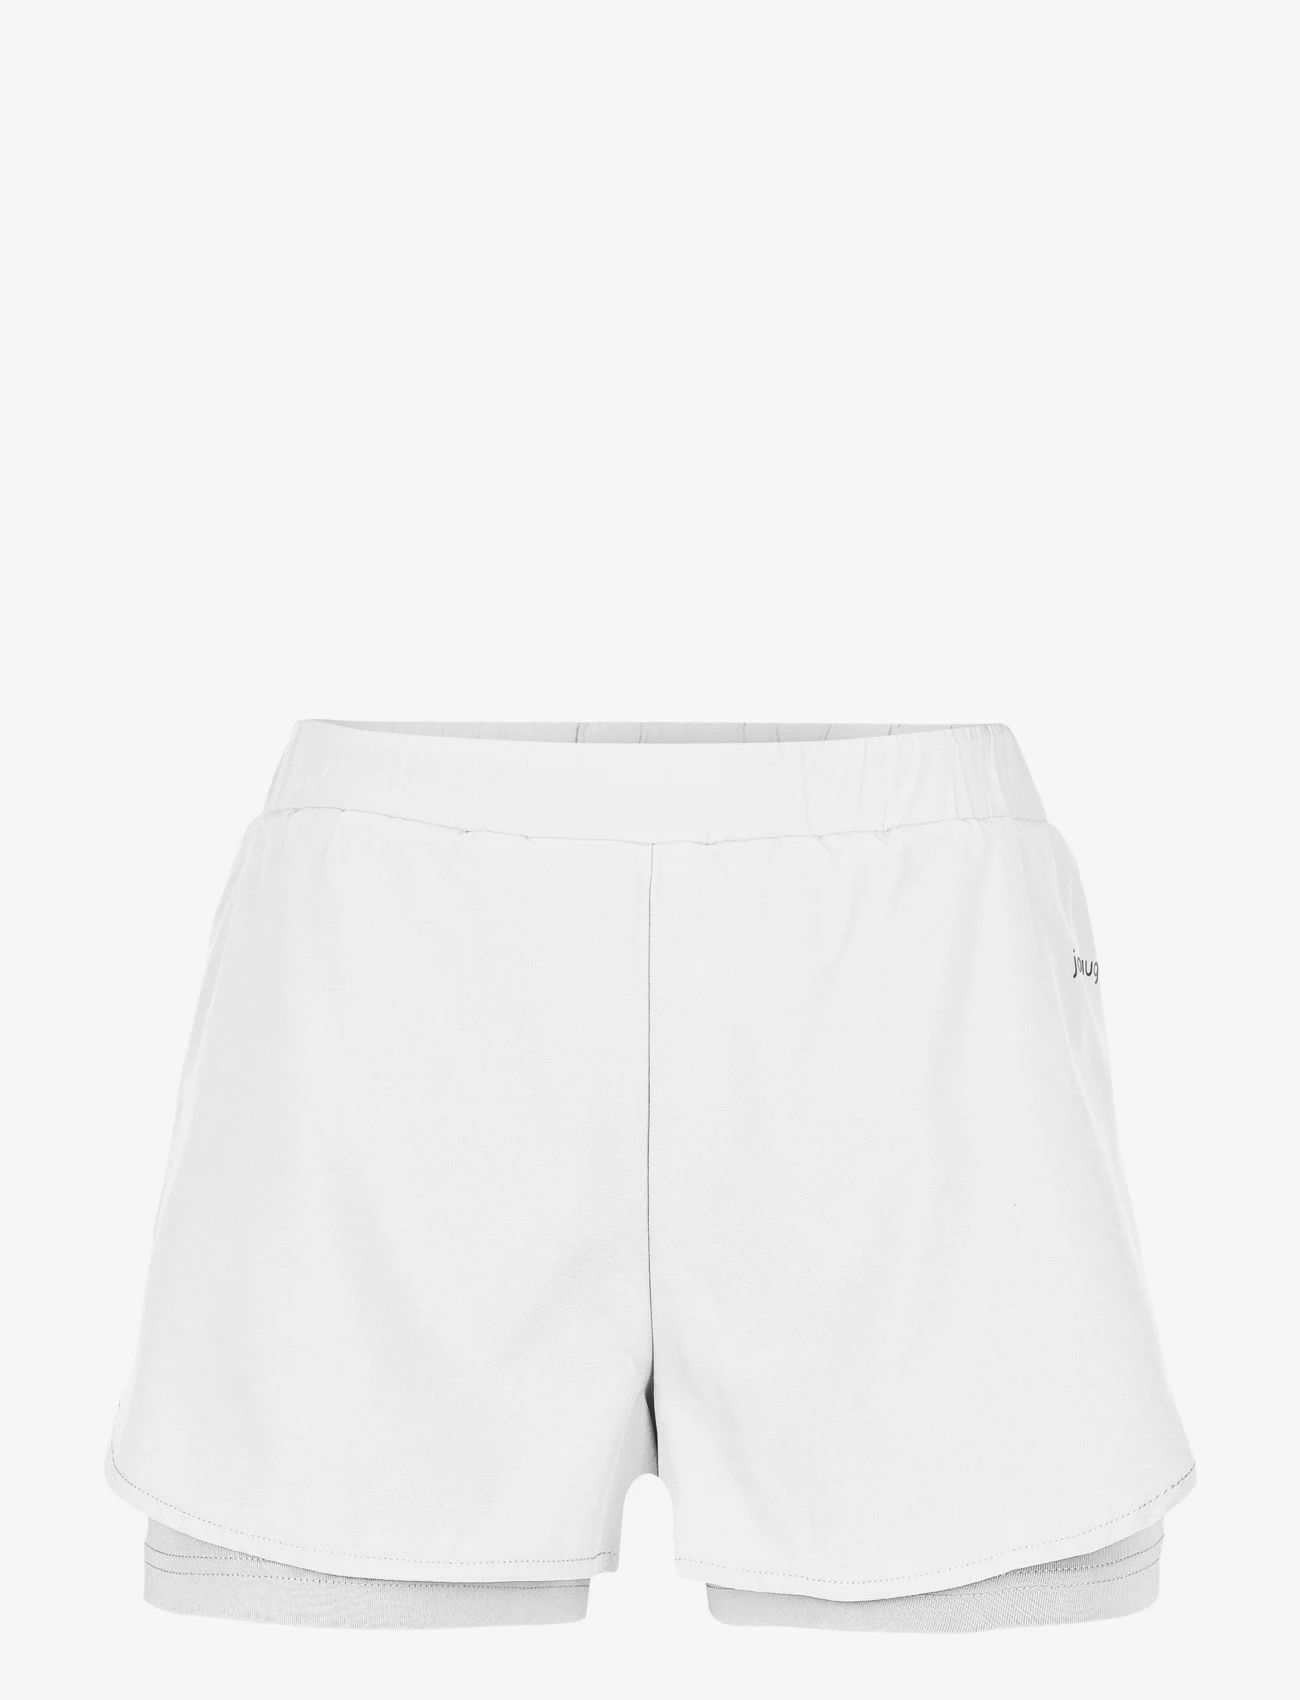 Johaug - Discipline Shorts 2.0 - urheilushortsit - white - 0